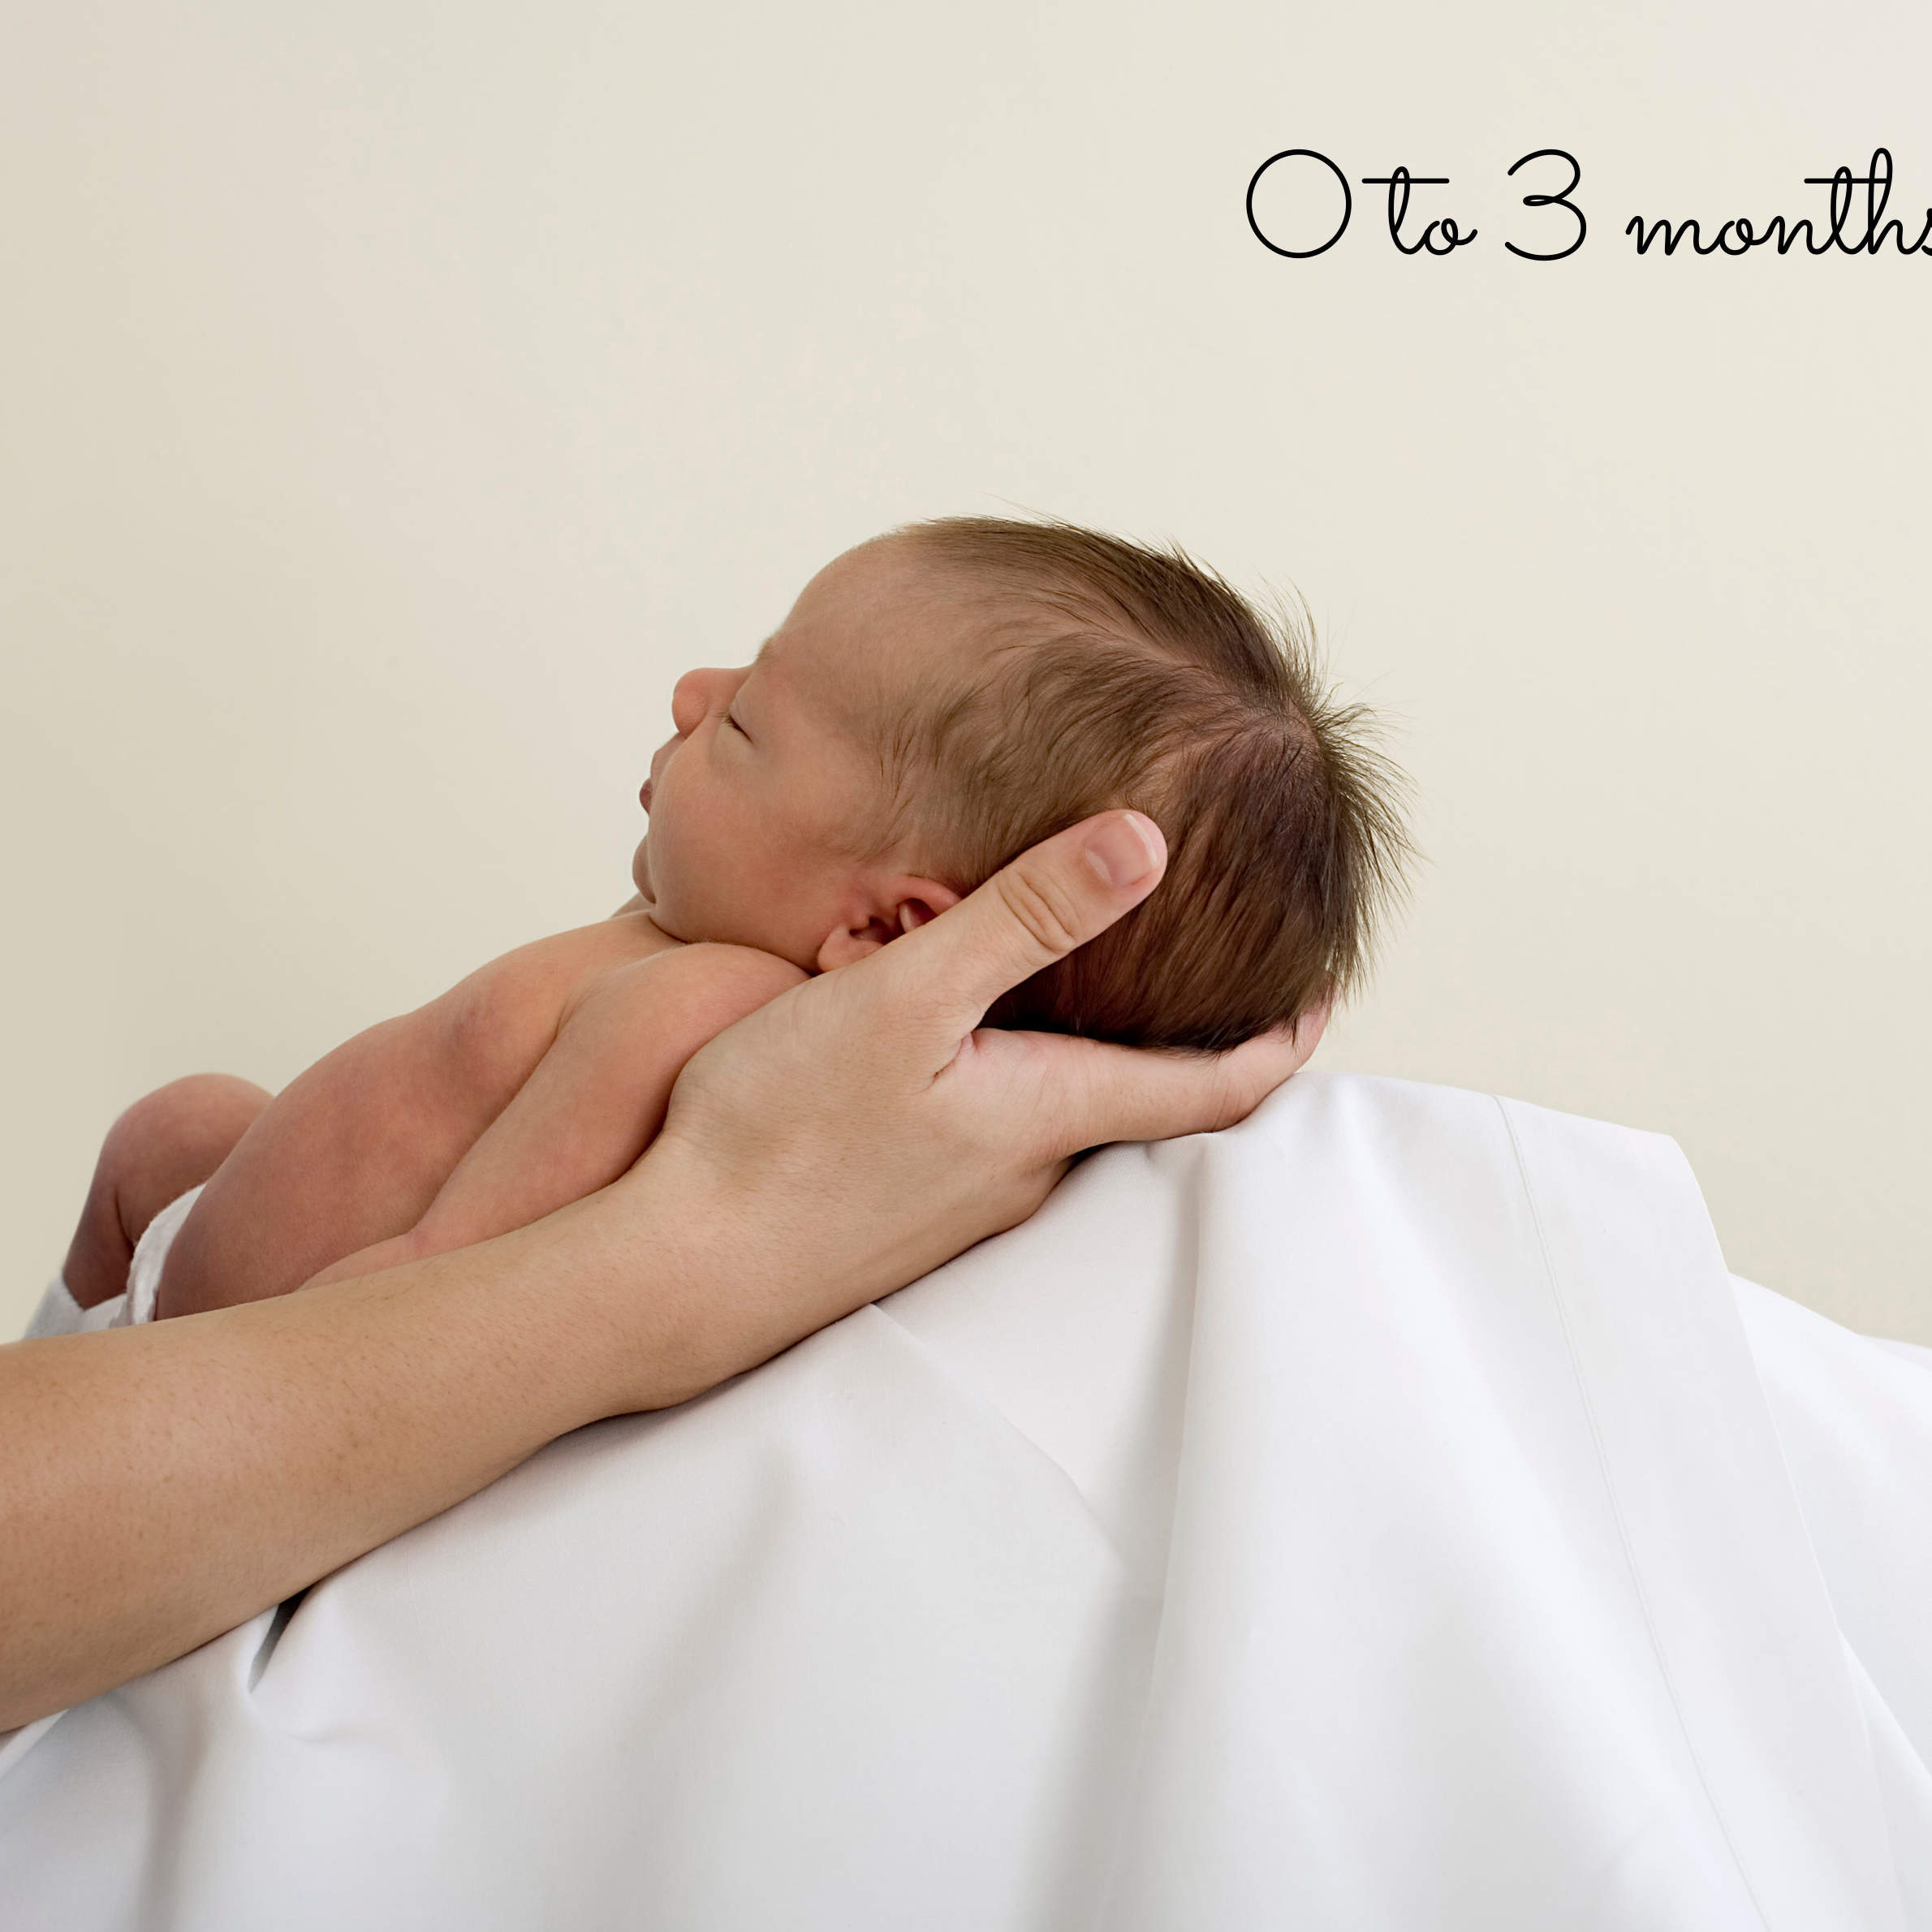 Development of babies between 0 and 3 months